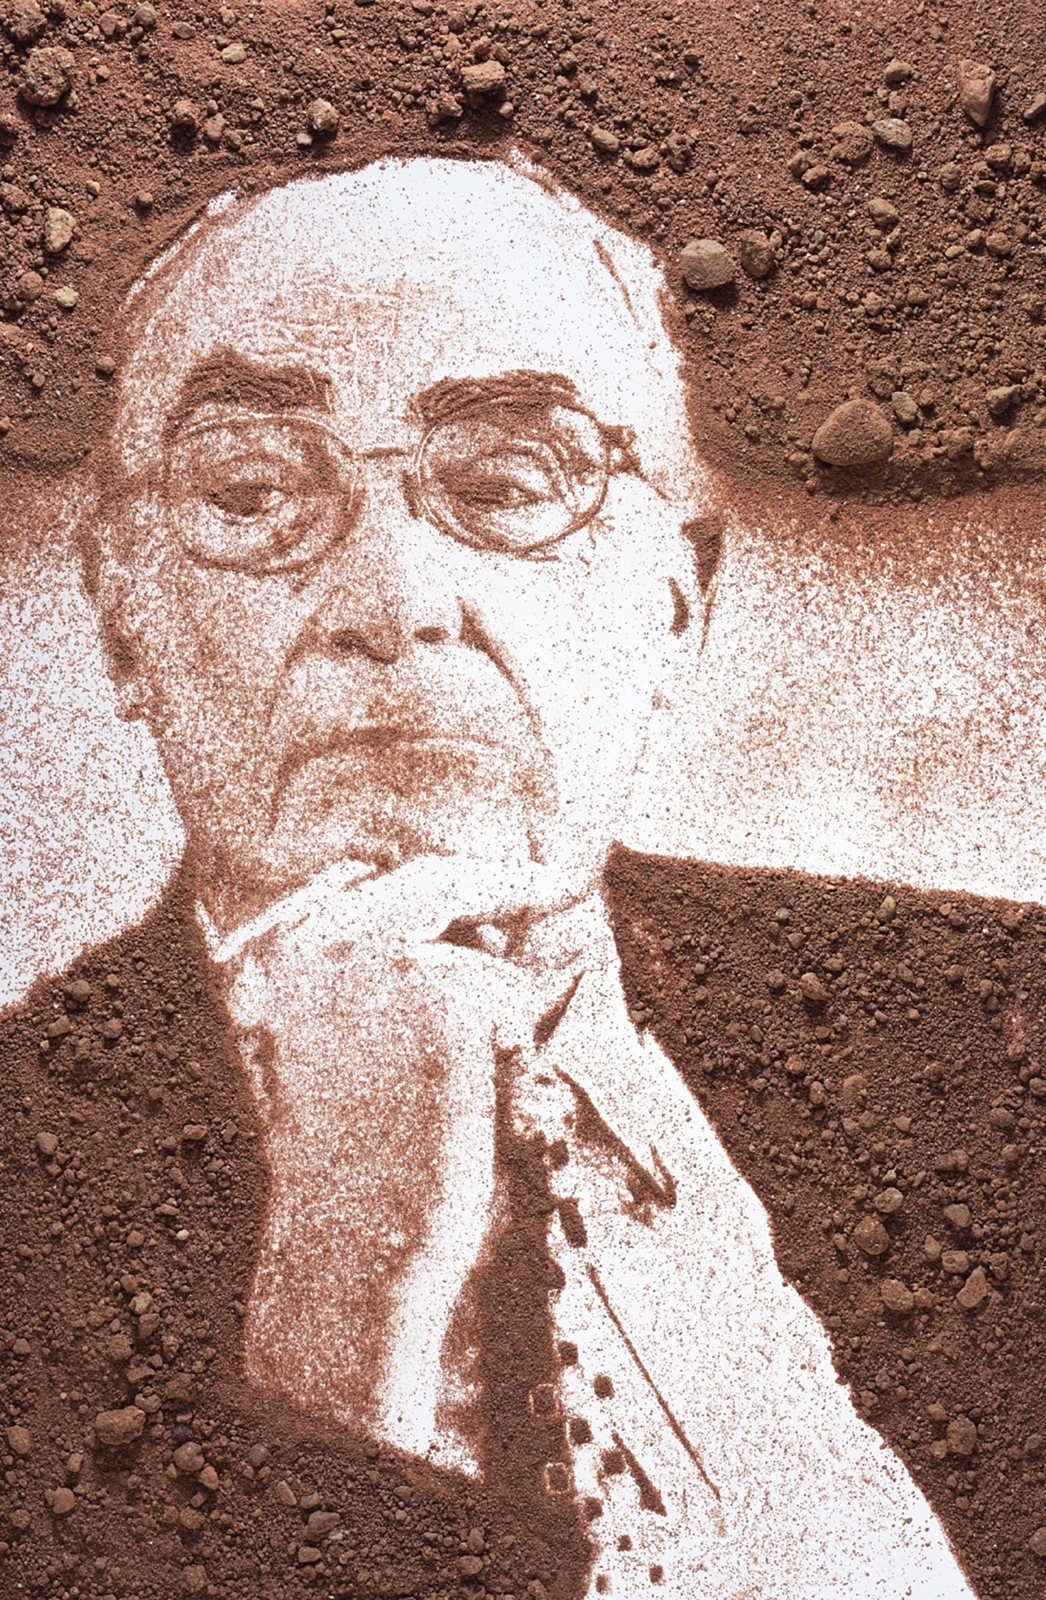 José Saramago, da série Pictures of Soil